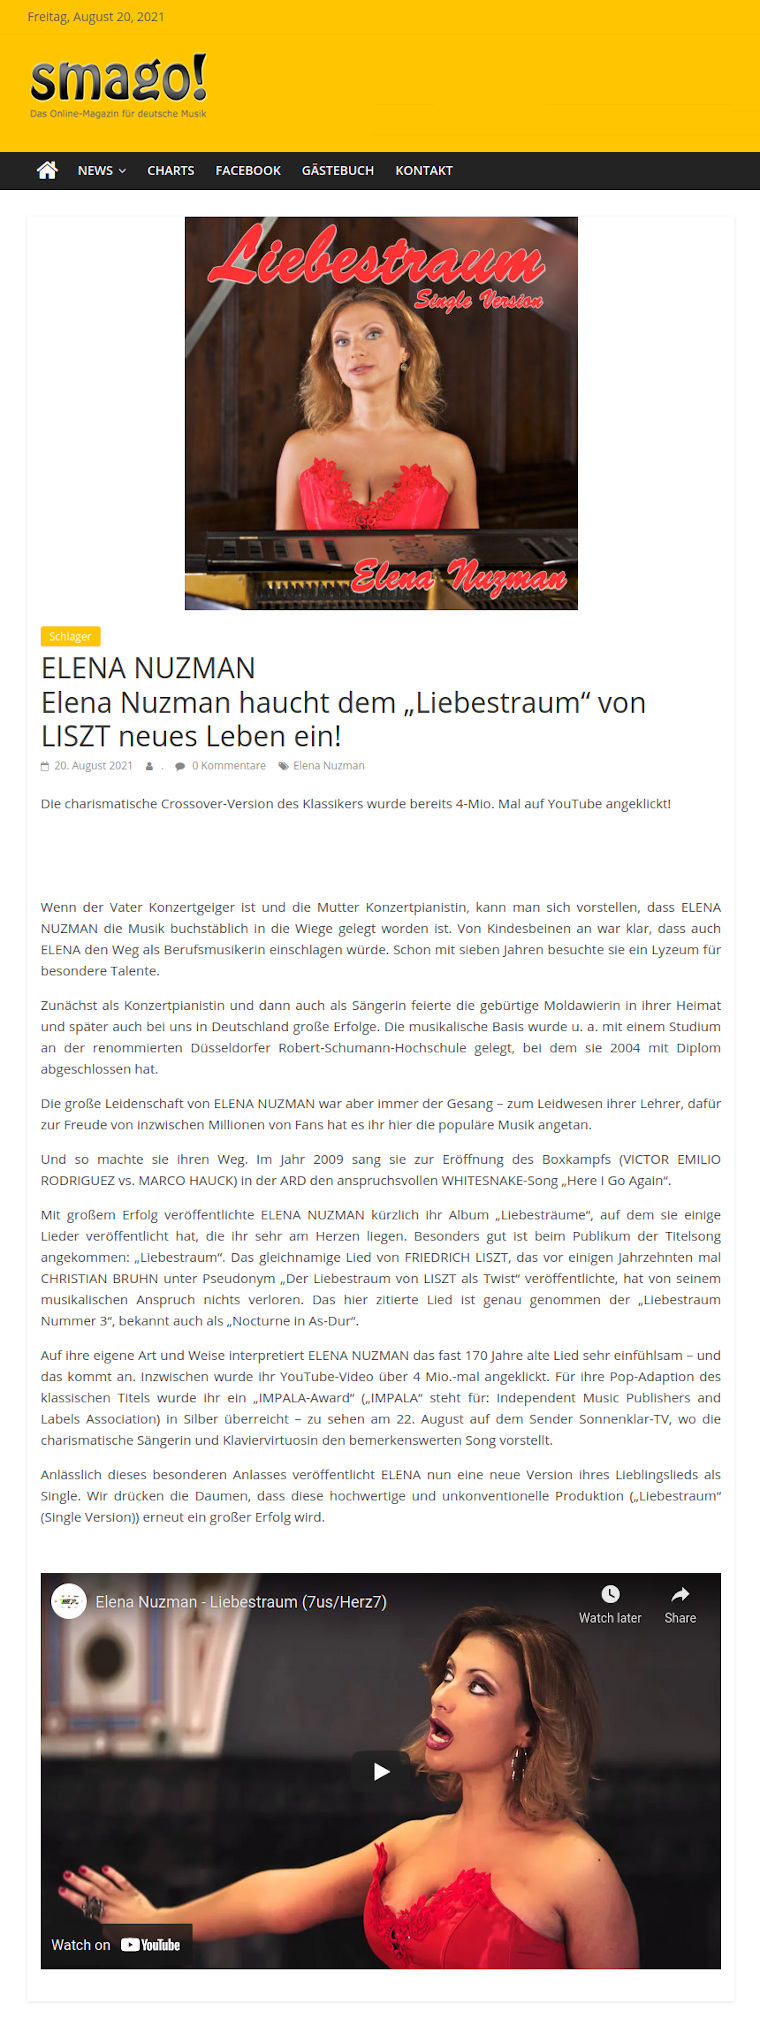 Elena Nuzman - smago.de - August 2021